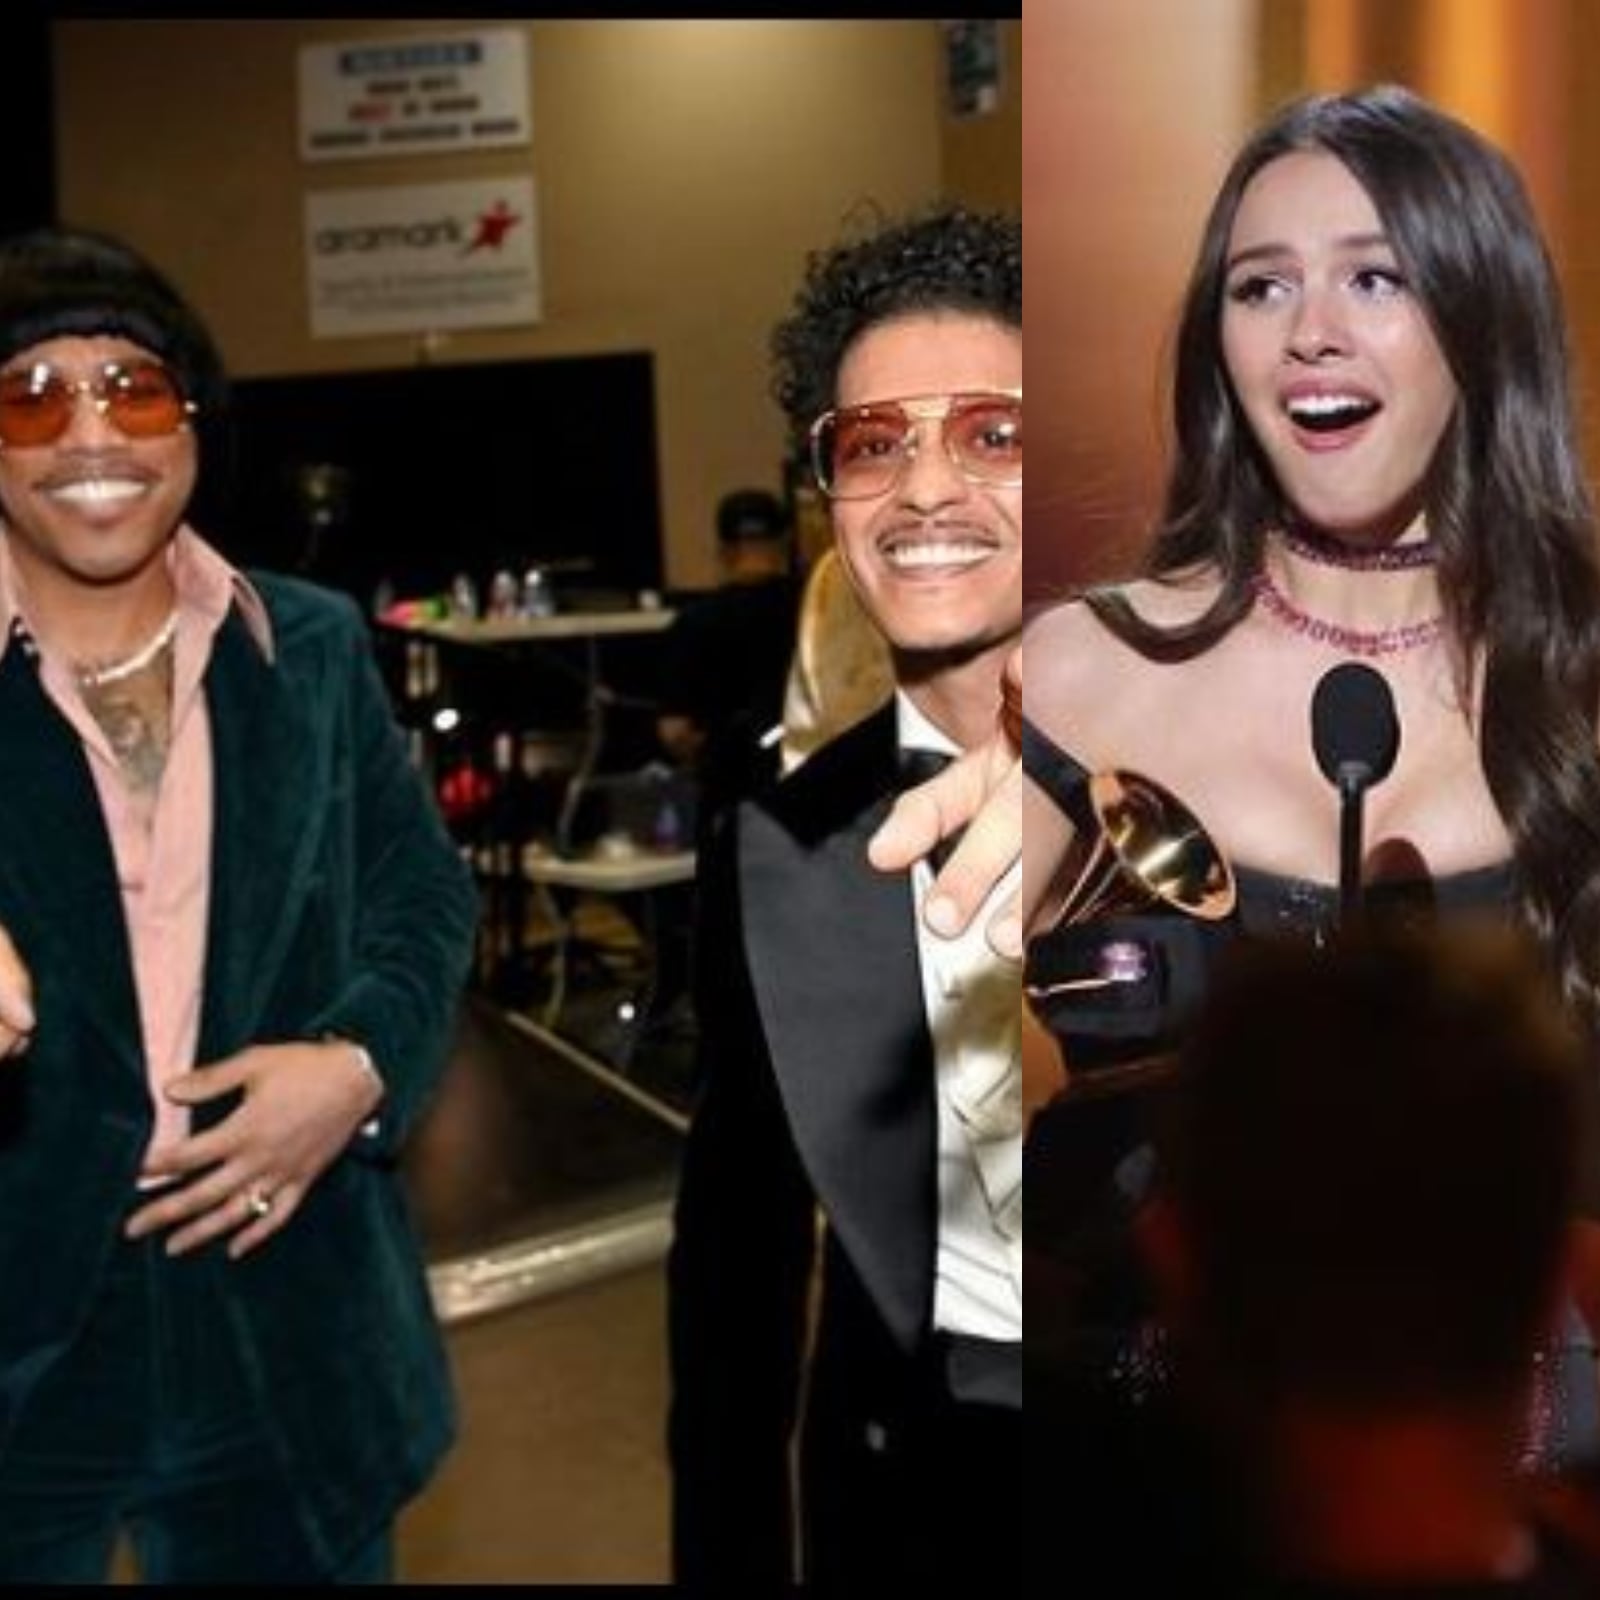 Grammys 2022: Olivia Rodrigo, BTS and more performers announced - Good  Morning America